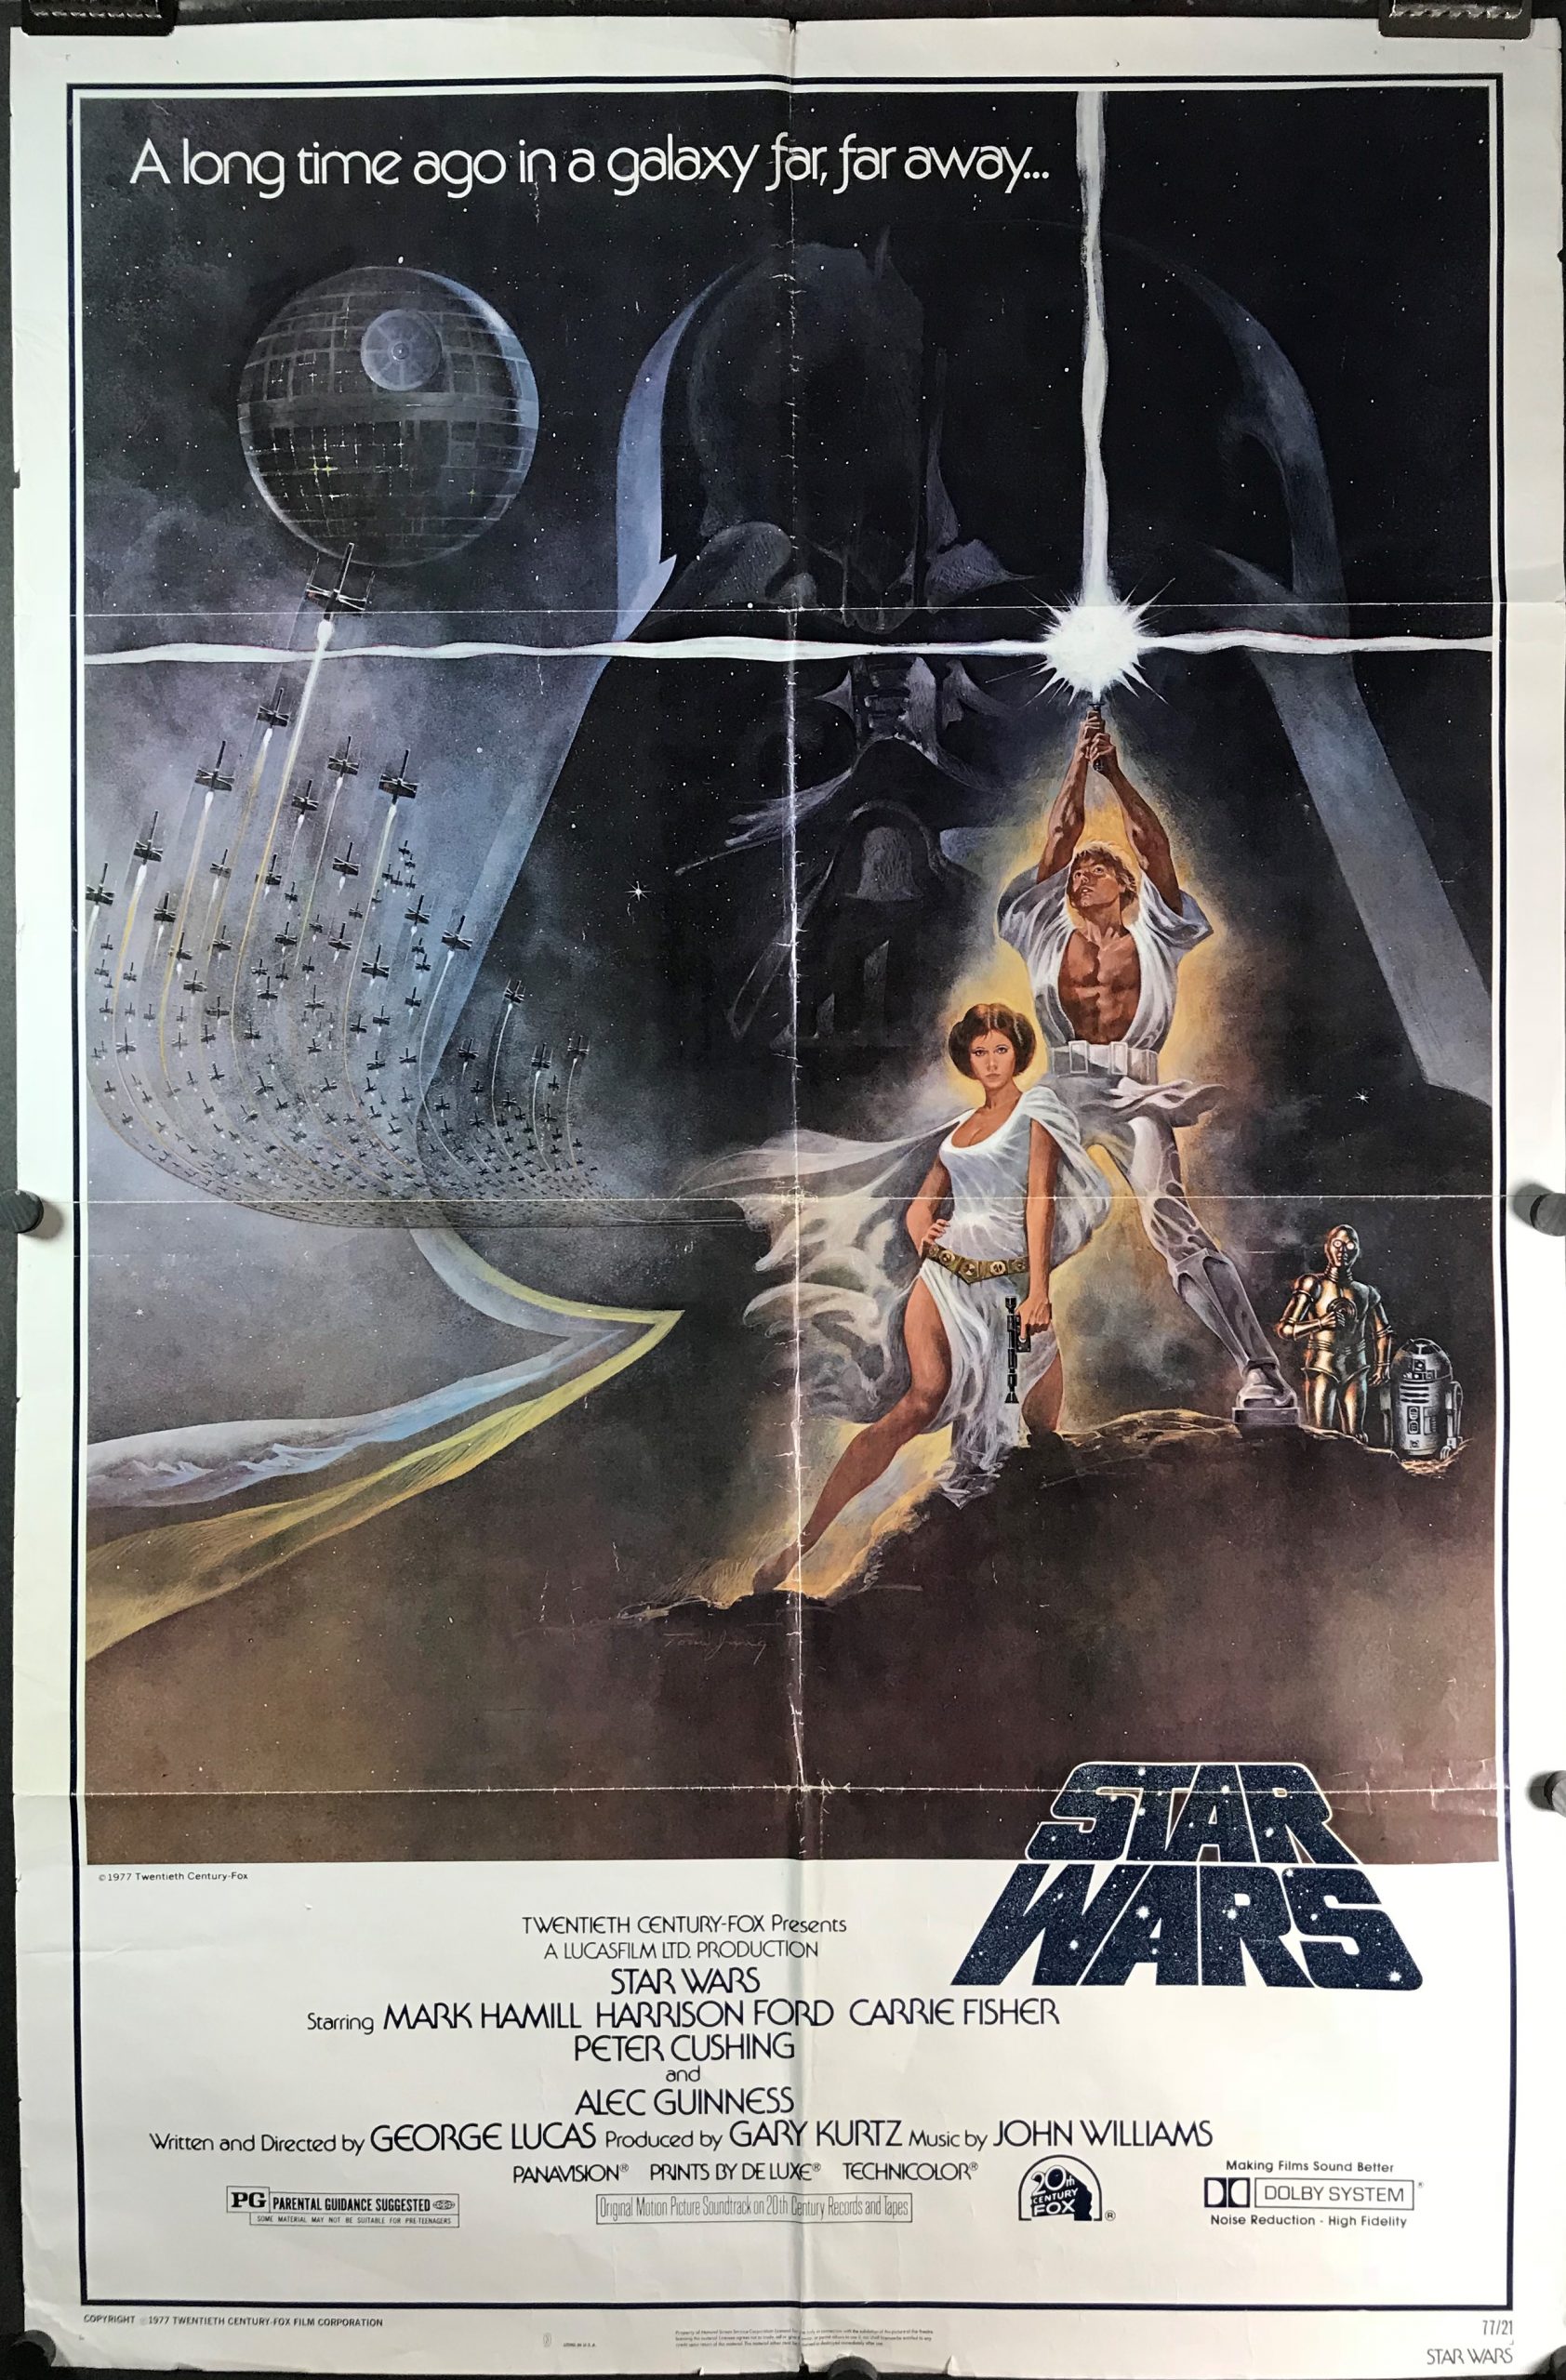 Space Saga Film Posters : star wars movie poster